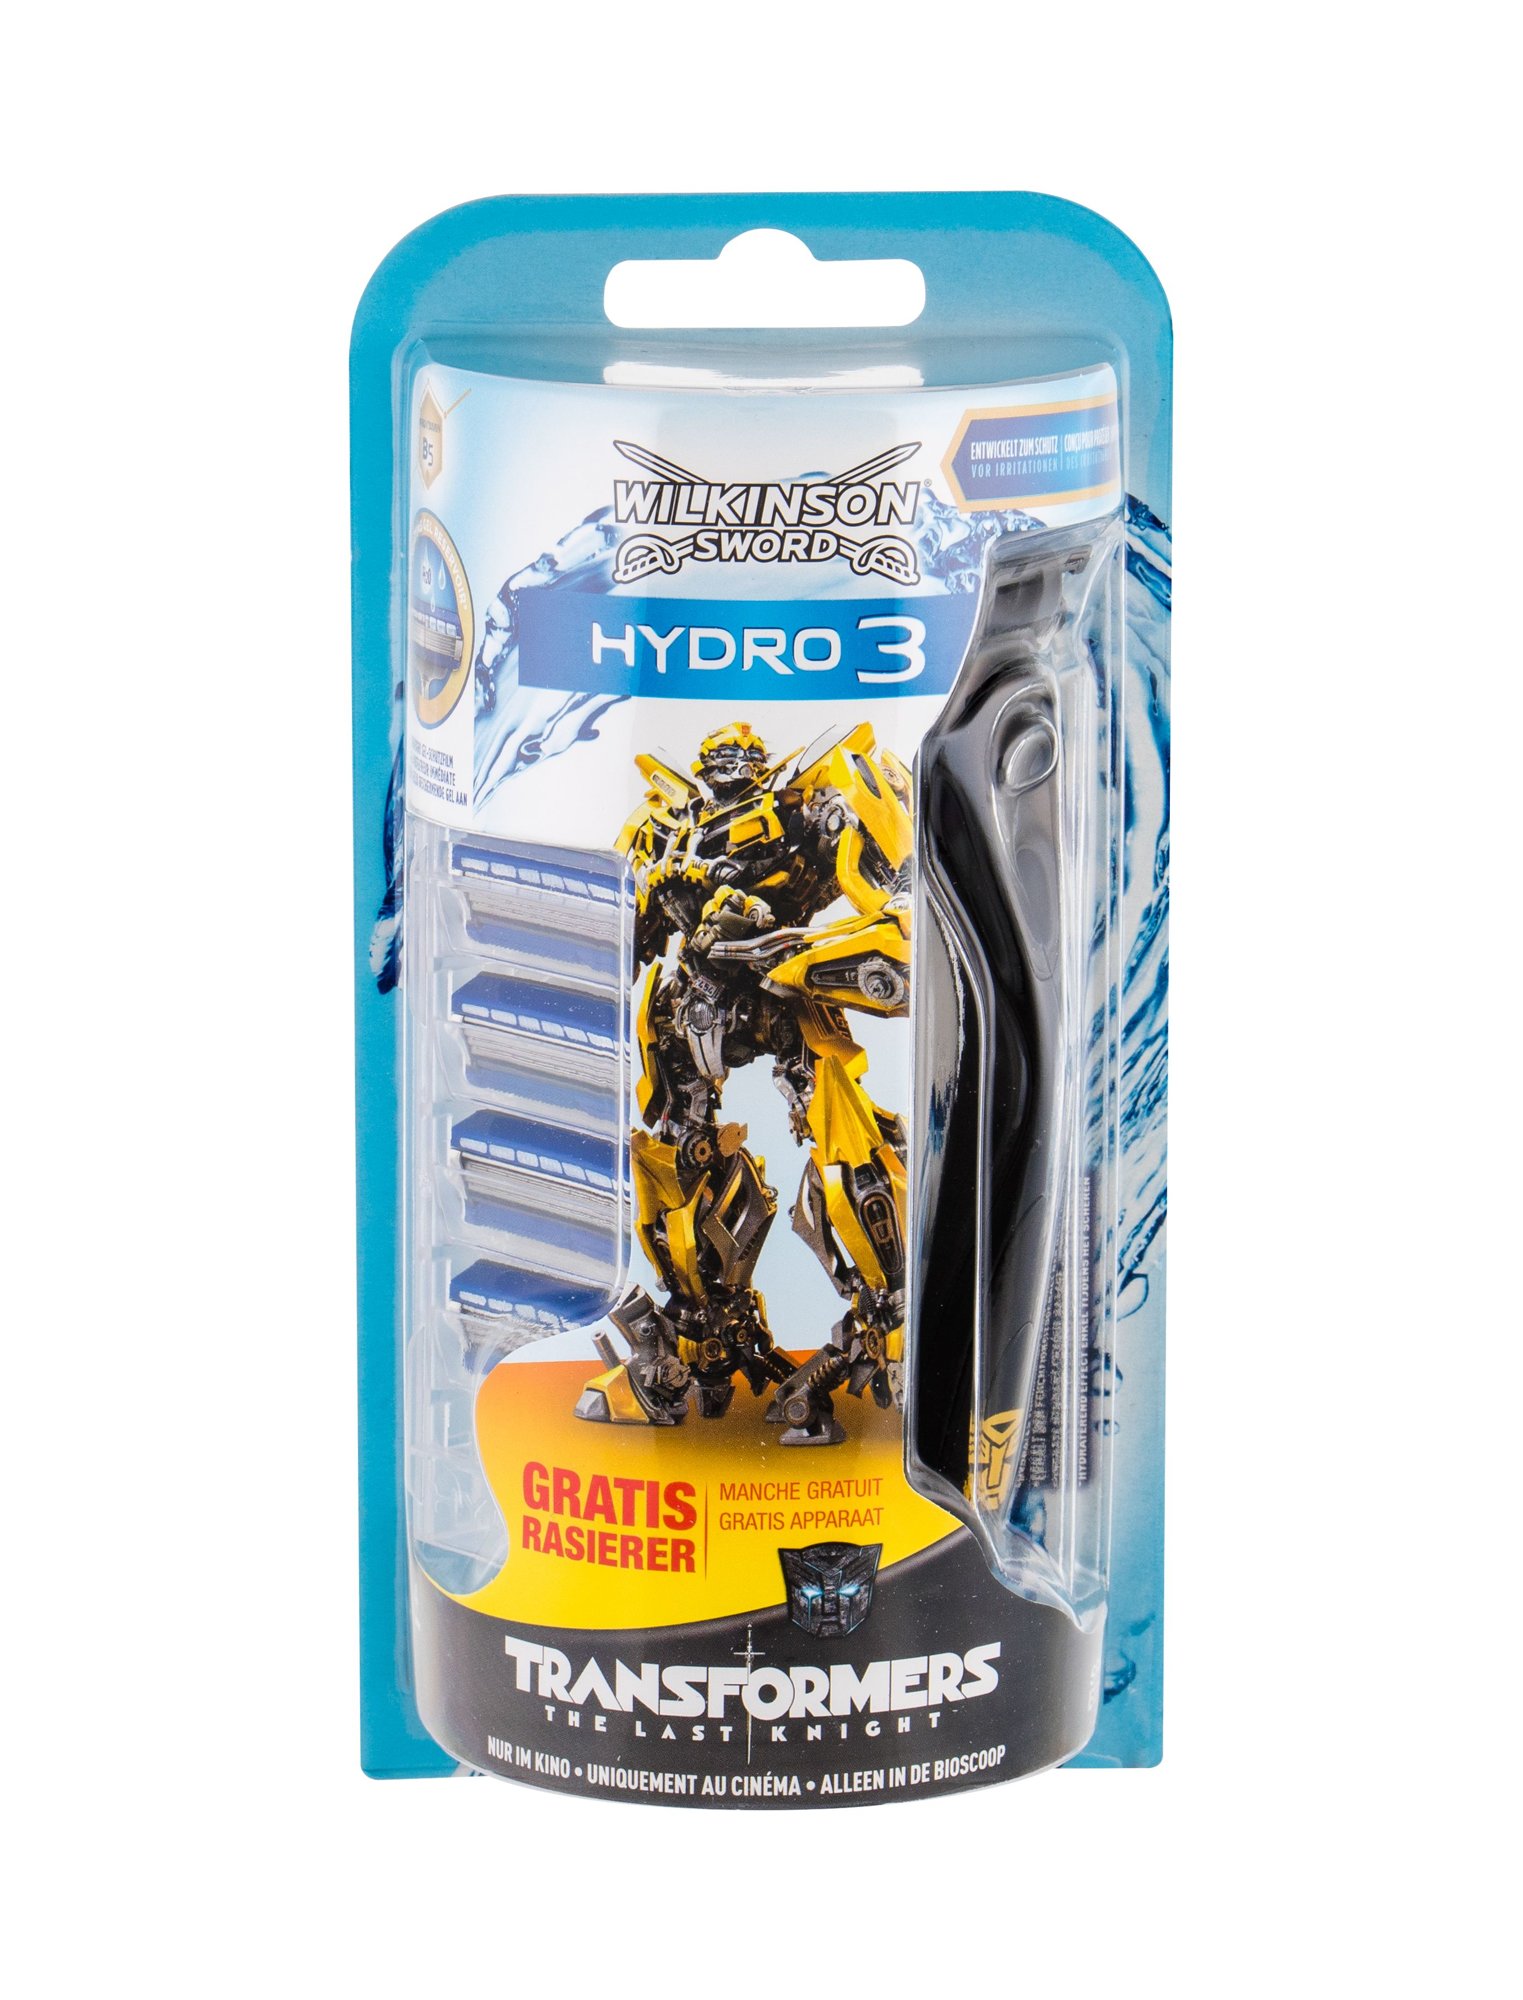 Wilkinson Sword Hydro 3 Transformers skustuvas